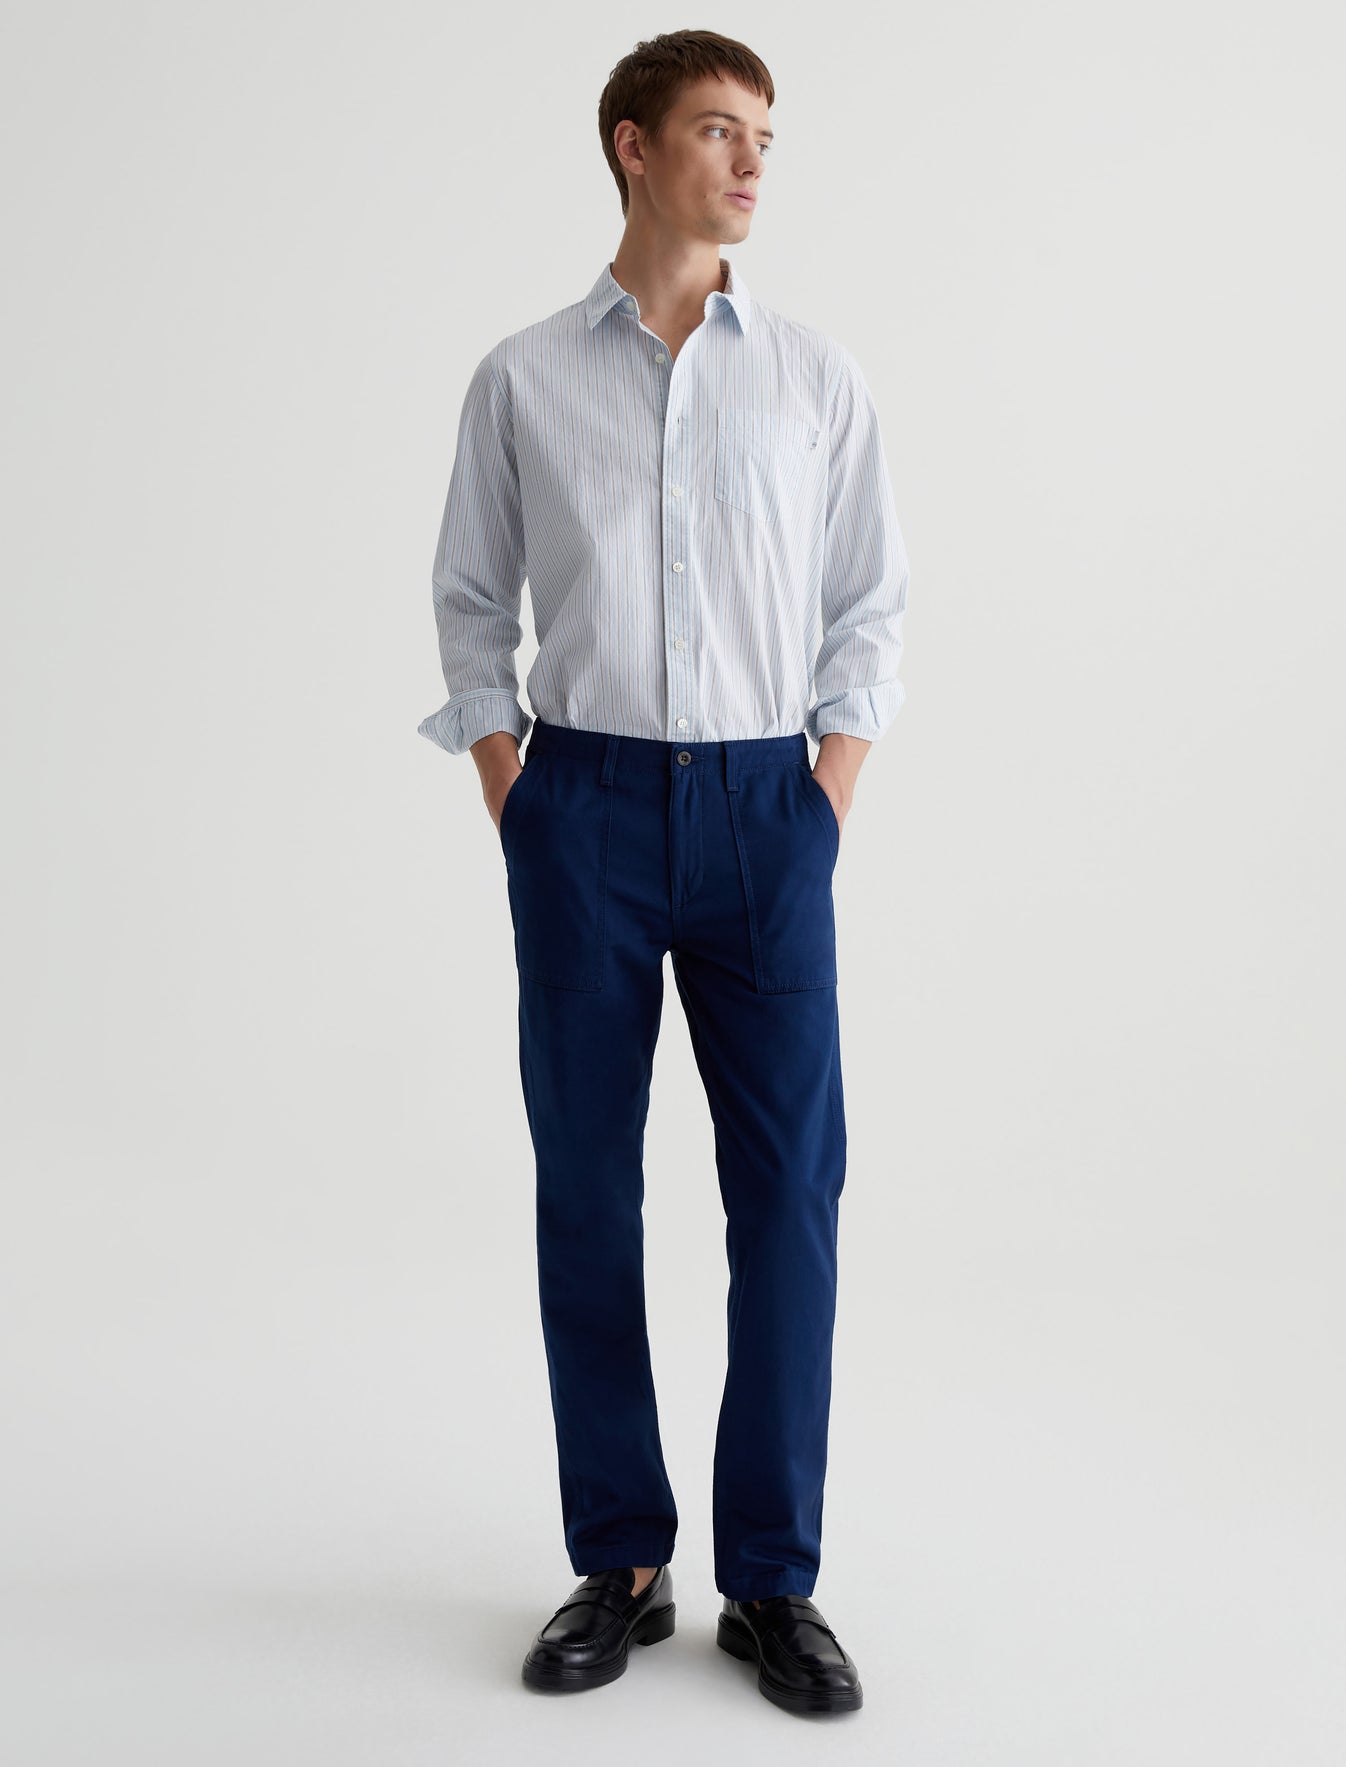 Aiden Shirt Gallery Stripe Blue Multi Classic Fit Long Sleeve Button-Up Shirt Men Top Photo 4